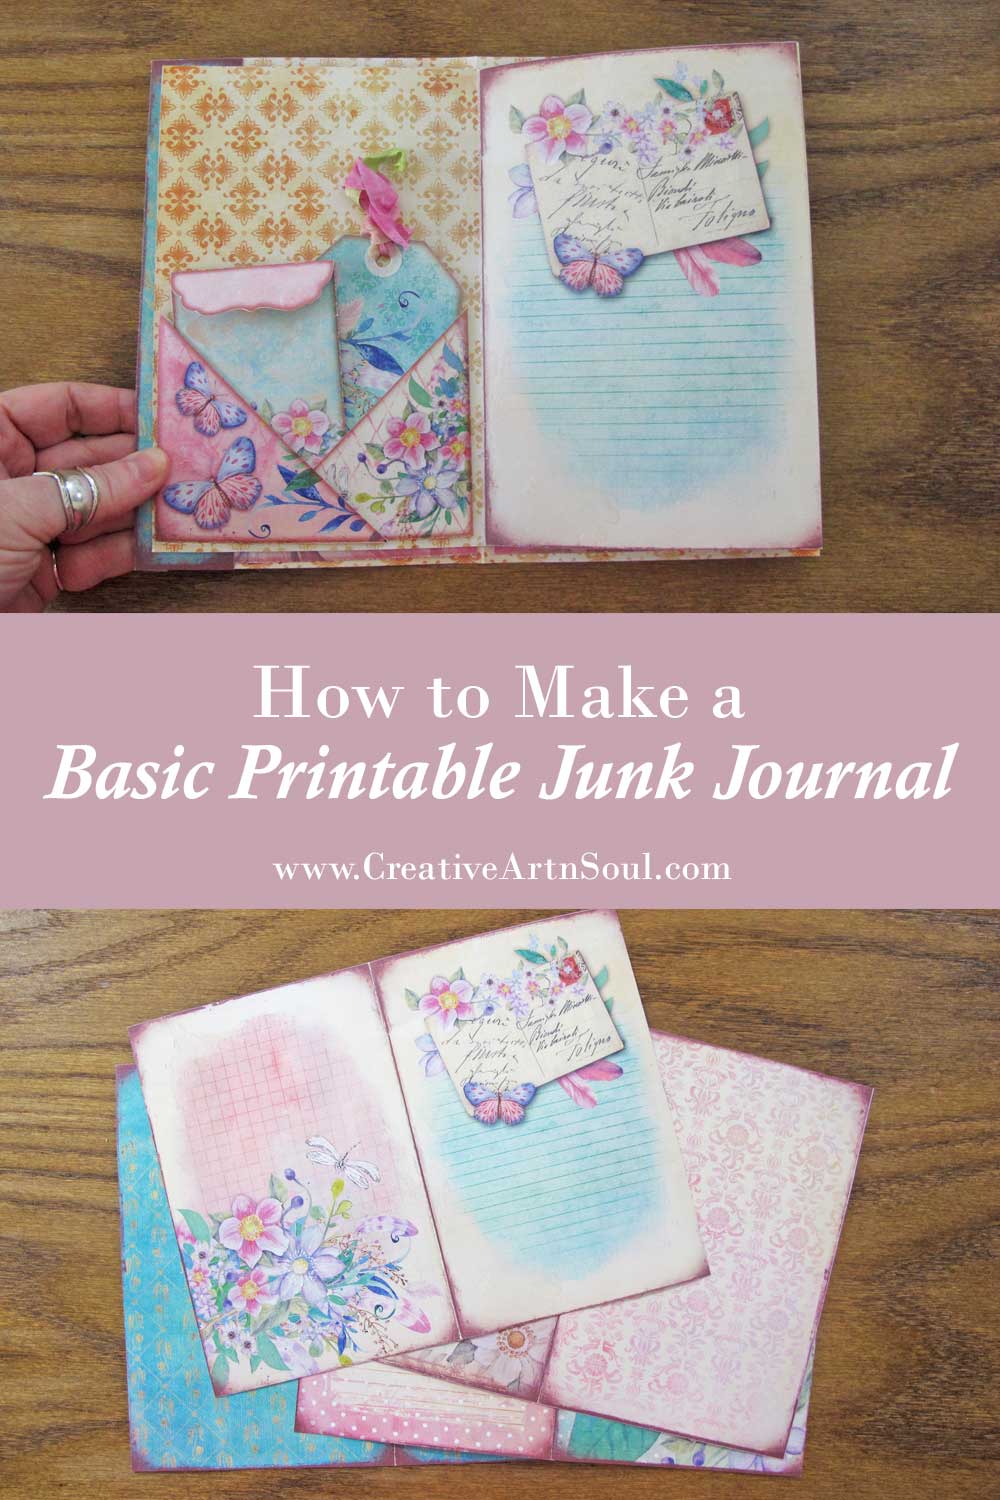 How to Make a Basic Printable Junk Journal > Creative ArtnSoul